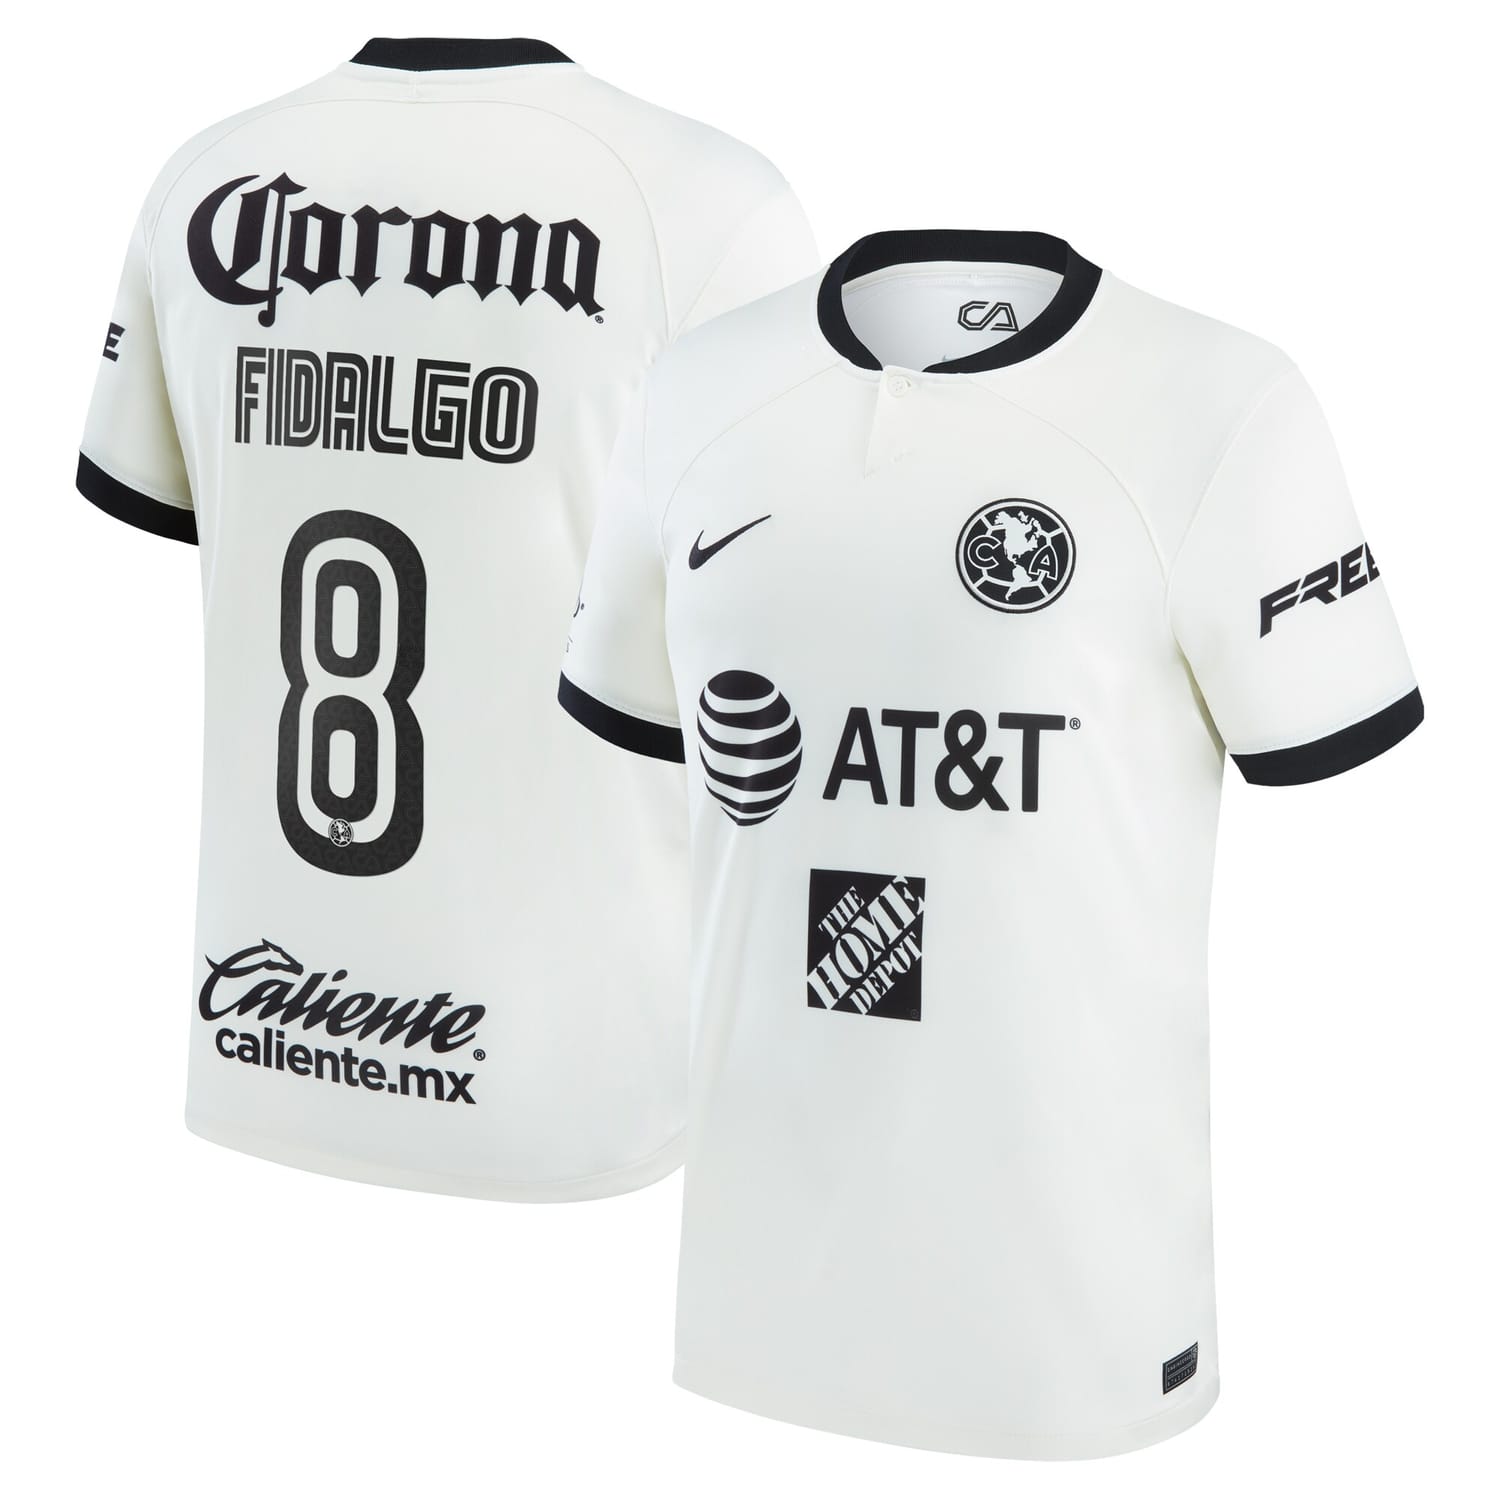 Liga MX Club America Third Jersey Shirt Wh. Light 2022-23 player Álvaro Fidalgo printing for Men